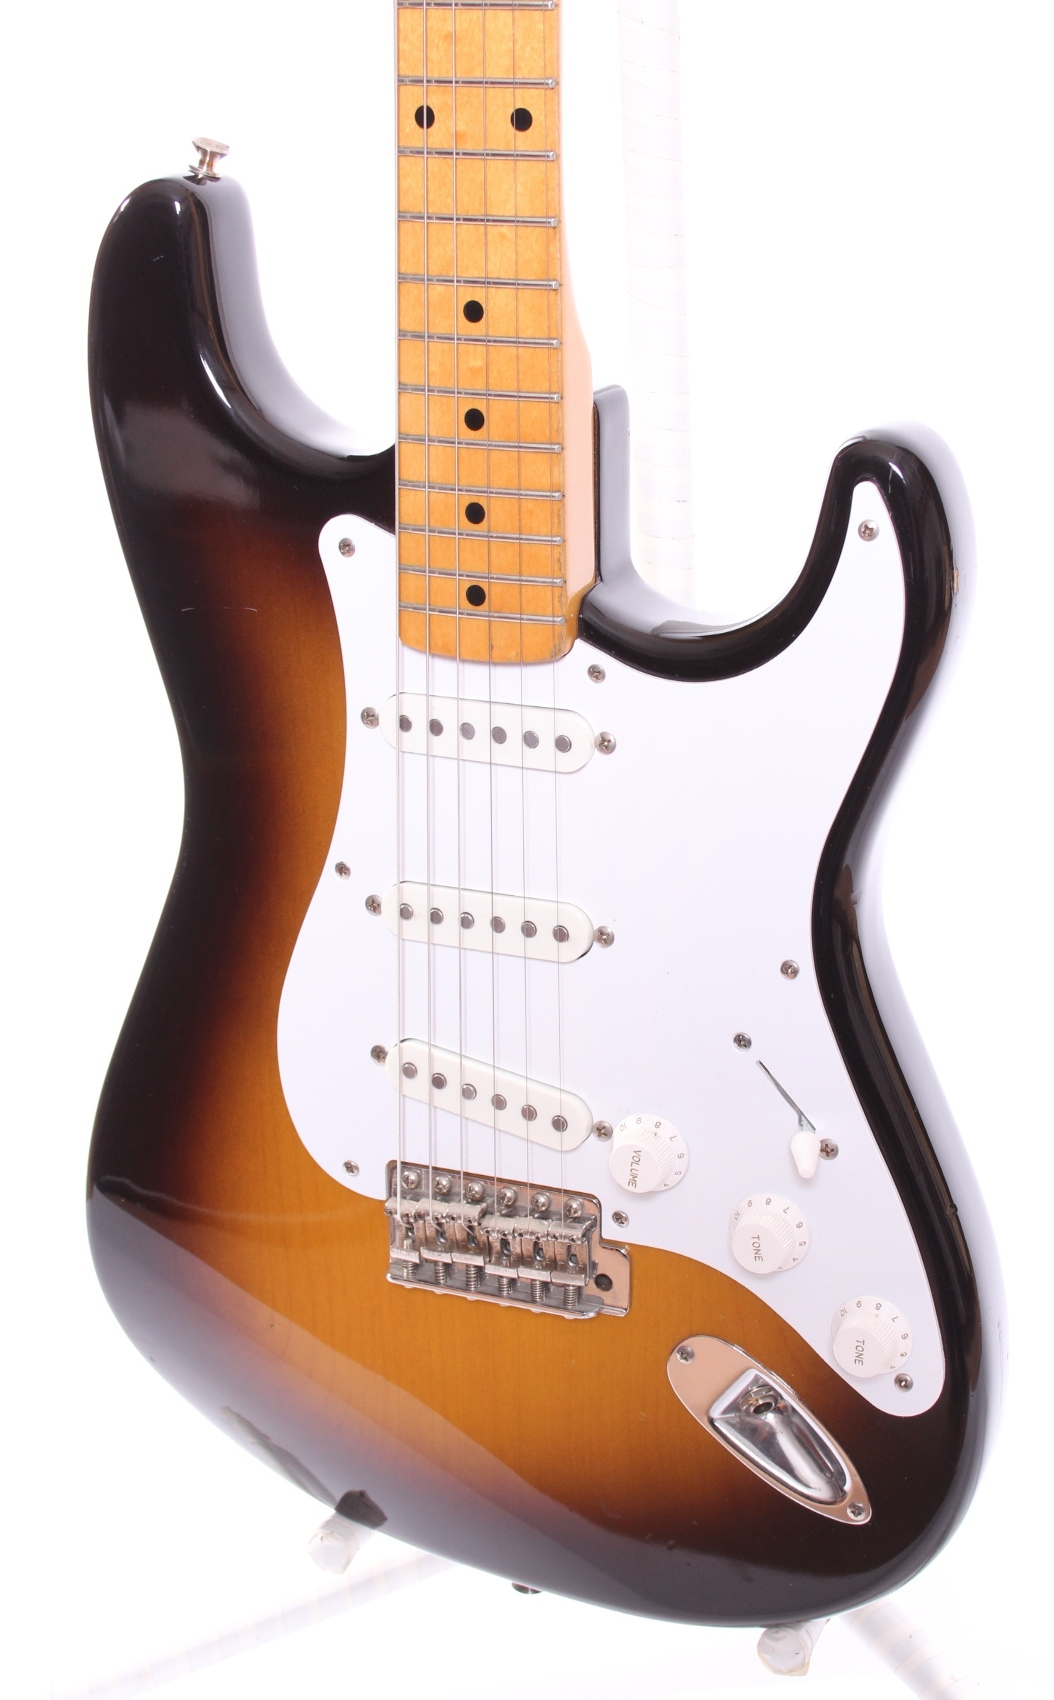 Tokai Goldstar Sound 1984 Two-tone Sunburst Guitar For Sale